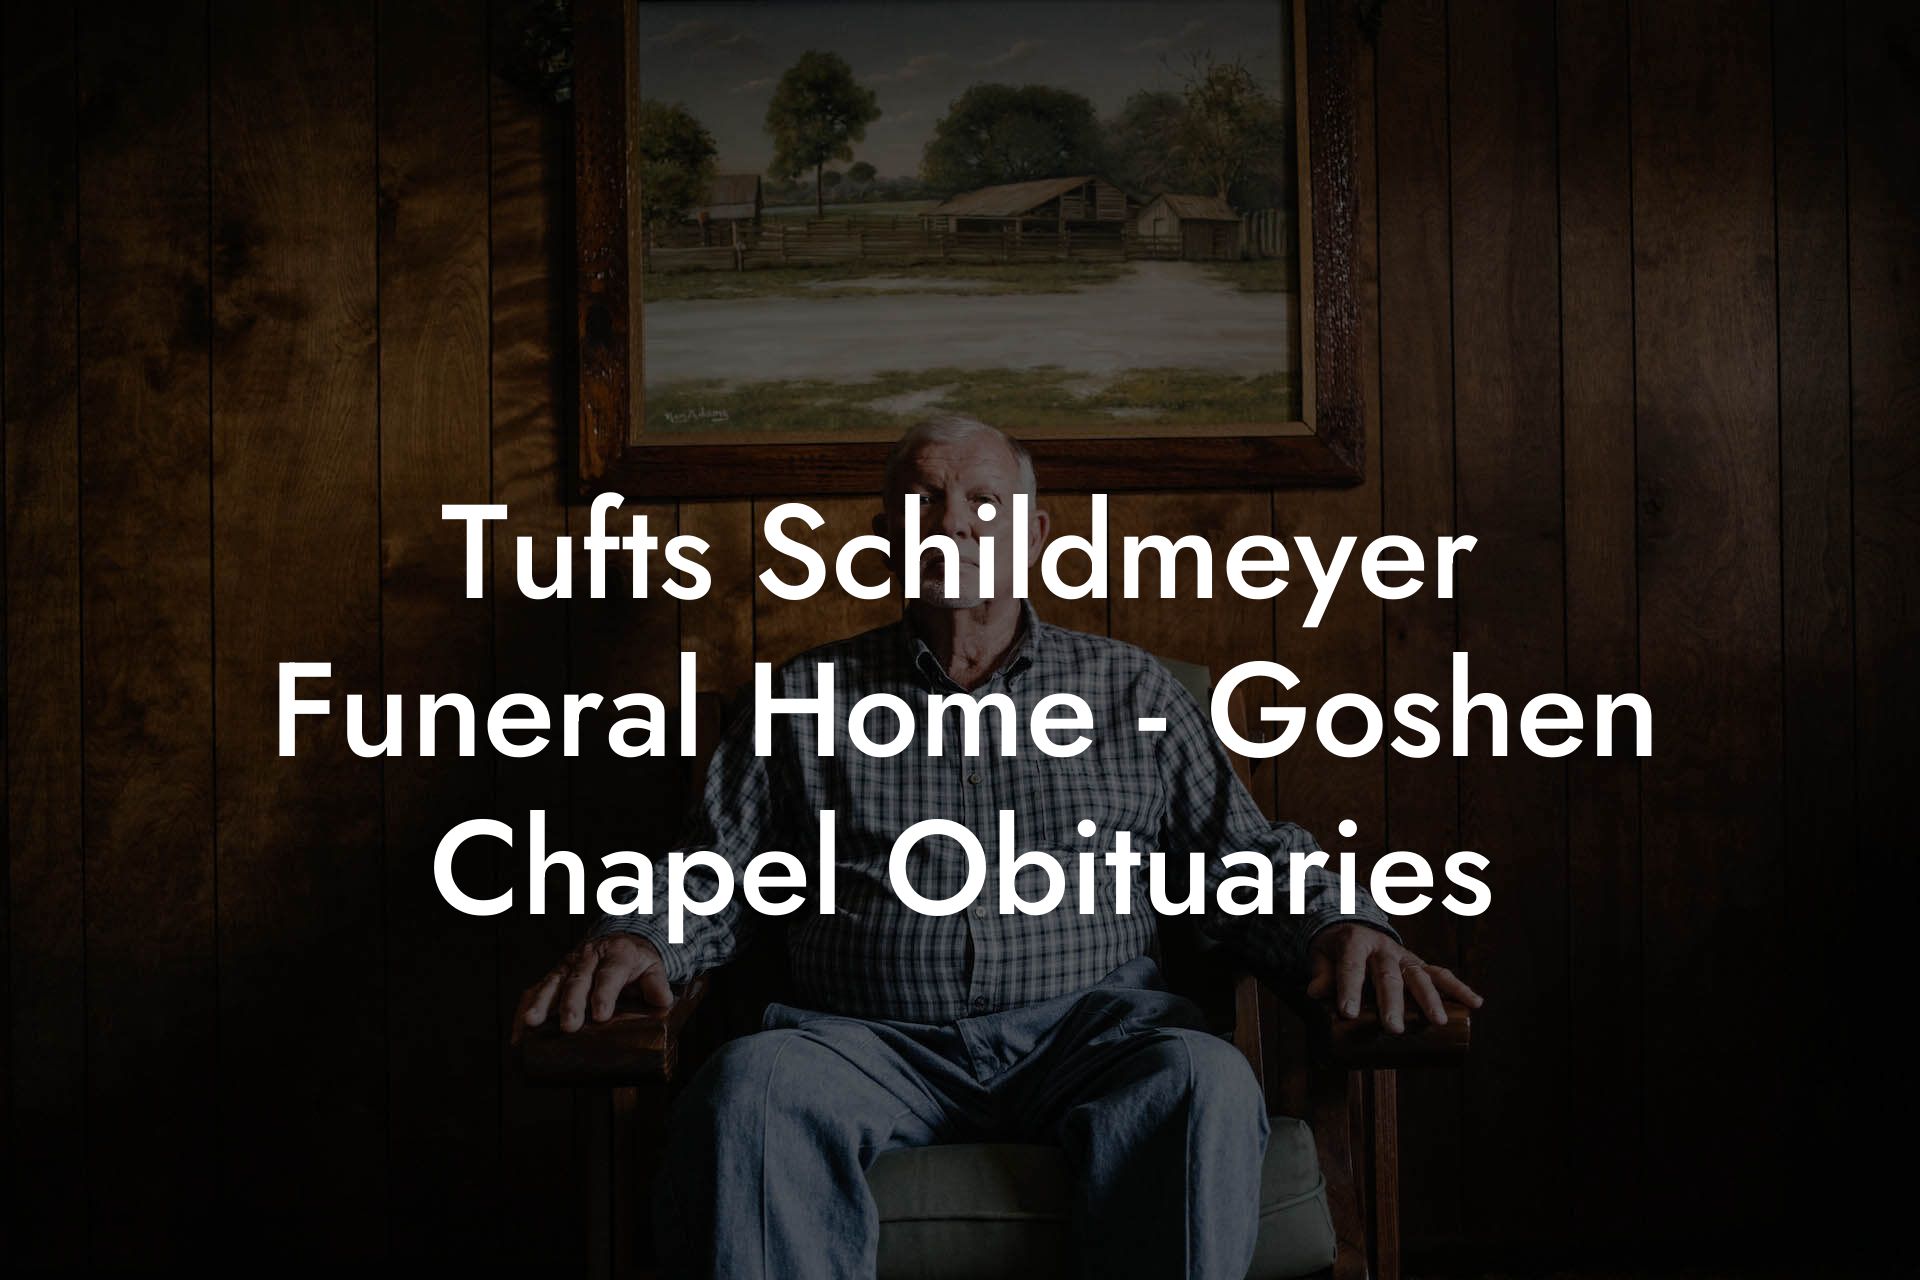 Tufts Schildmeyer Funeral Home - Goshen Chapel Obituaries